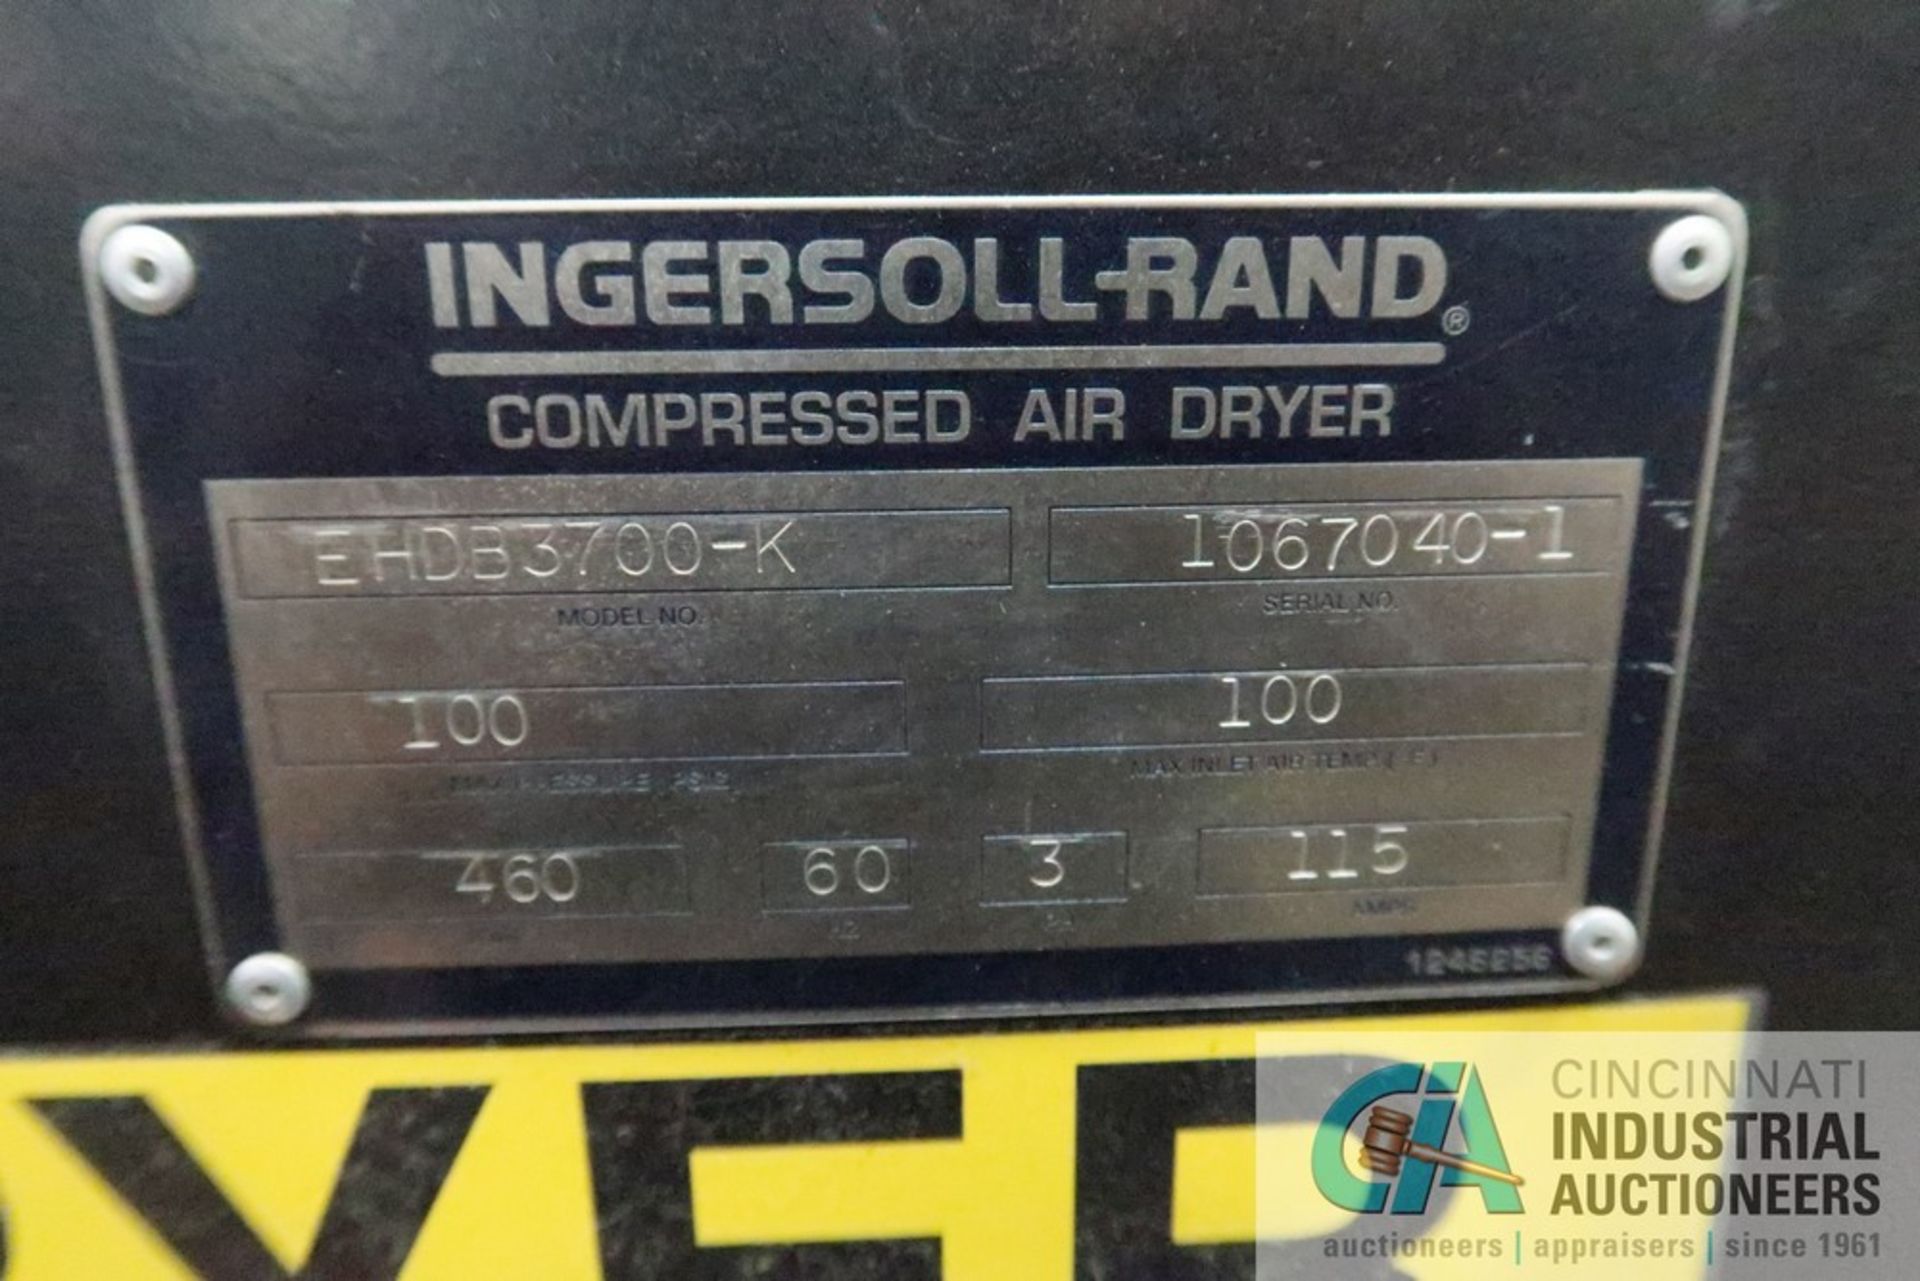 INGERSOLL RAND EHDB3700-K DESICCANT AIR DRYER; S/N 1067040-1 - Image 4 of 7